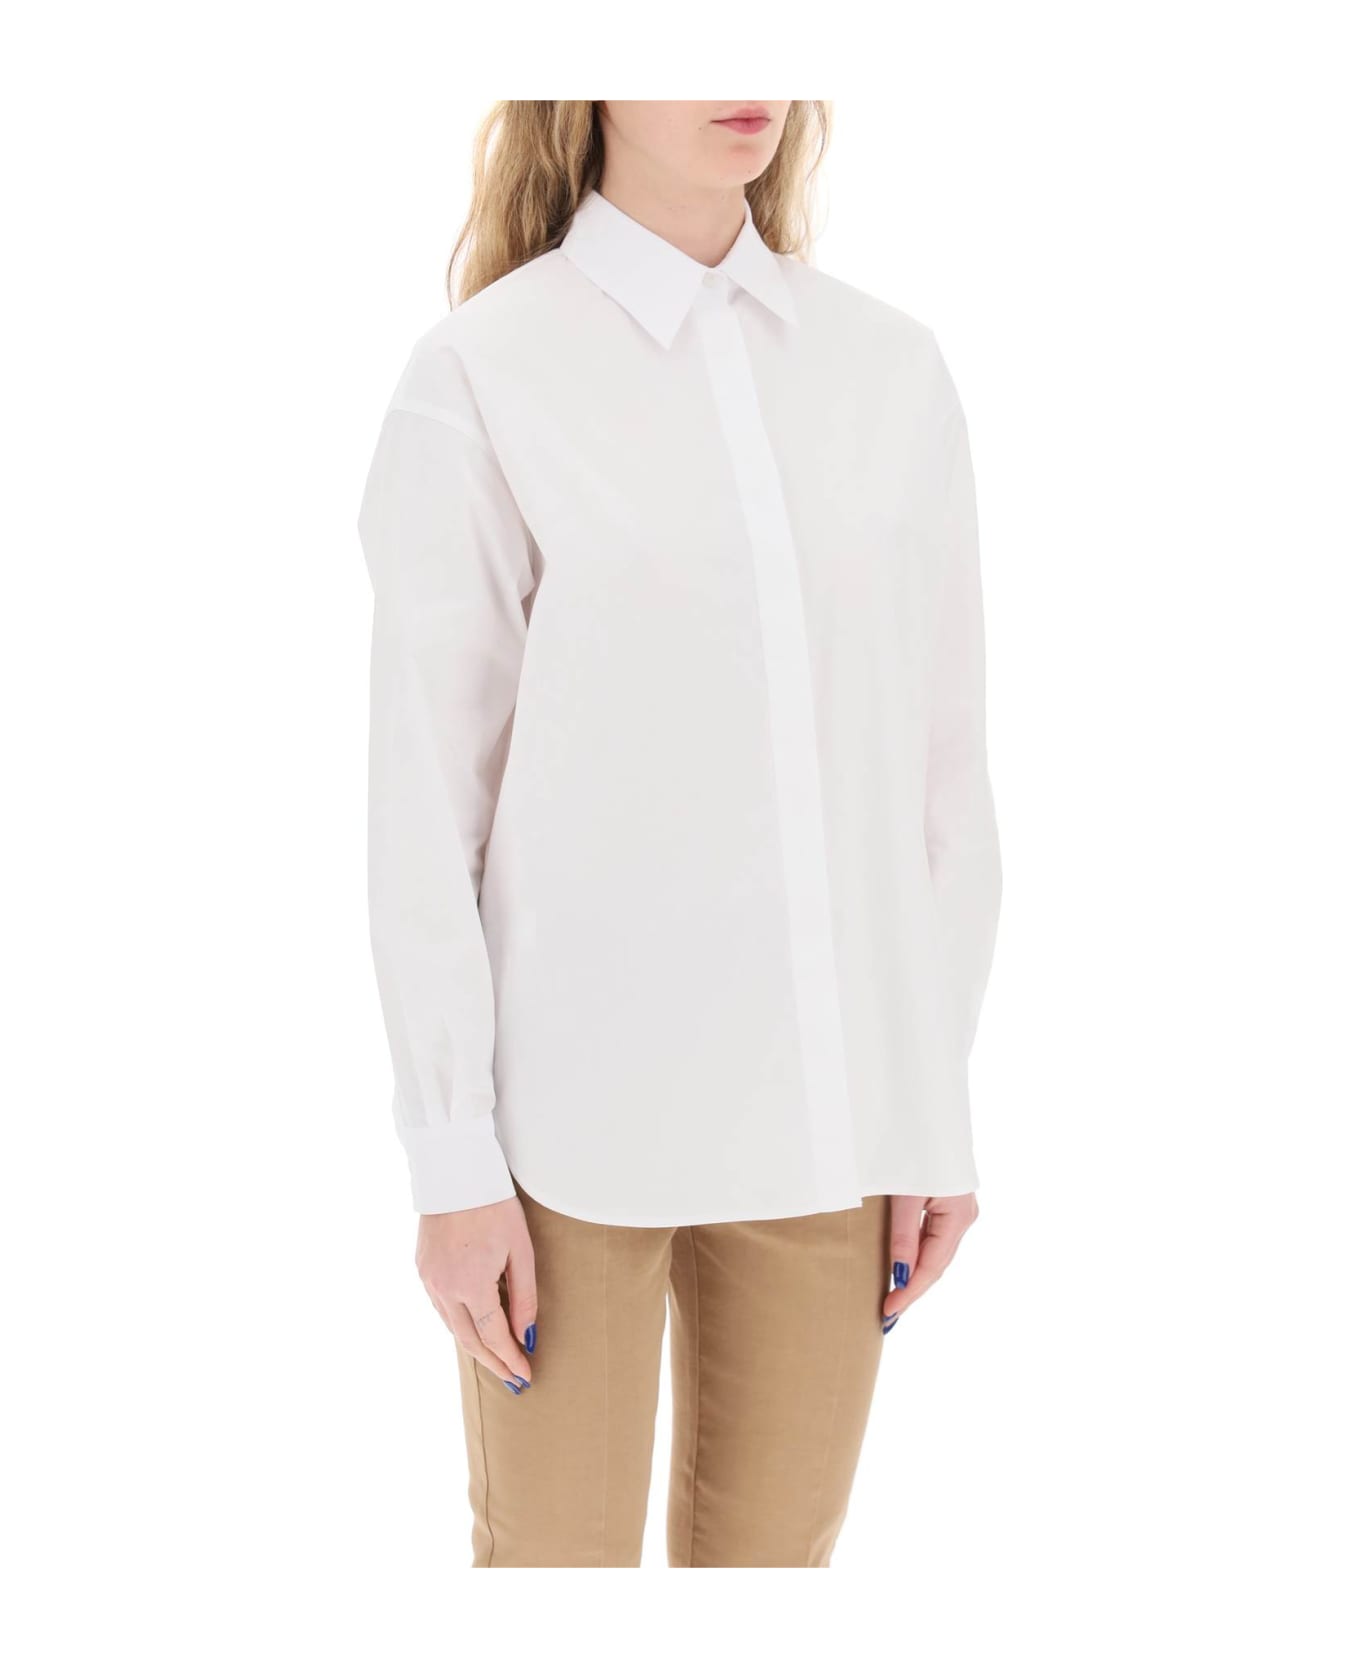 Pinko Cotton Popeline Shirt - BIANCO BRILLANTE (White) シャツ